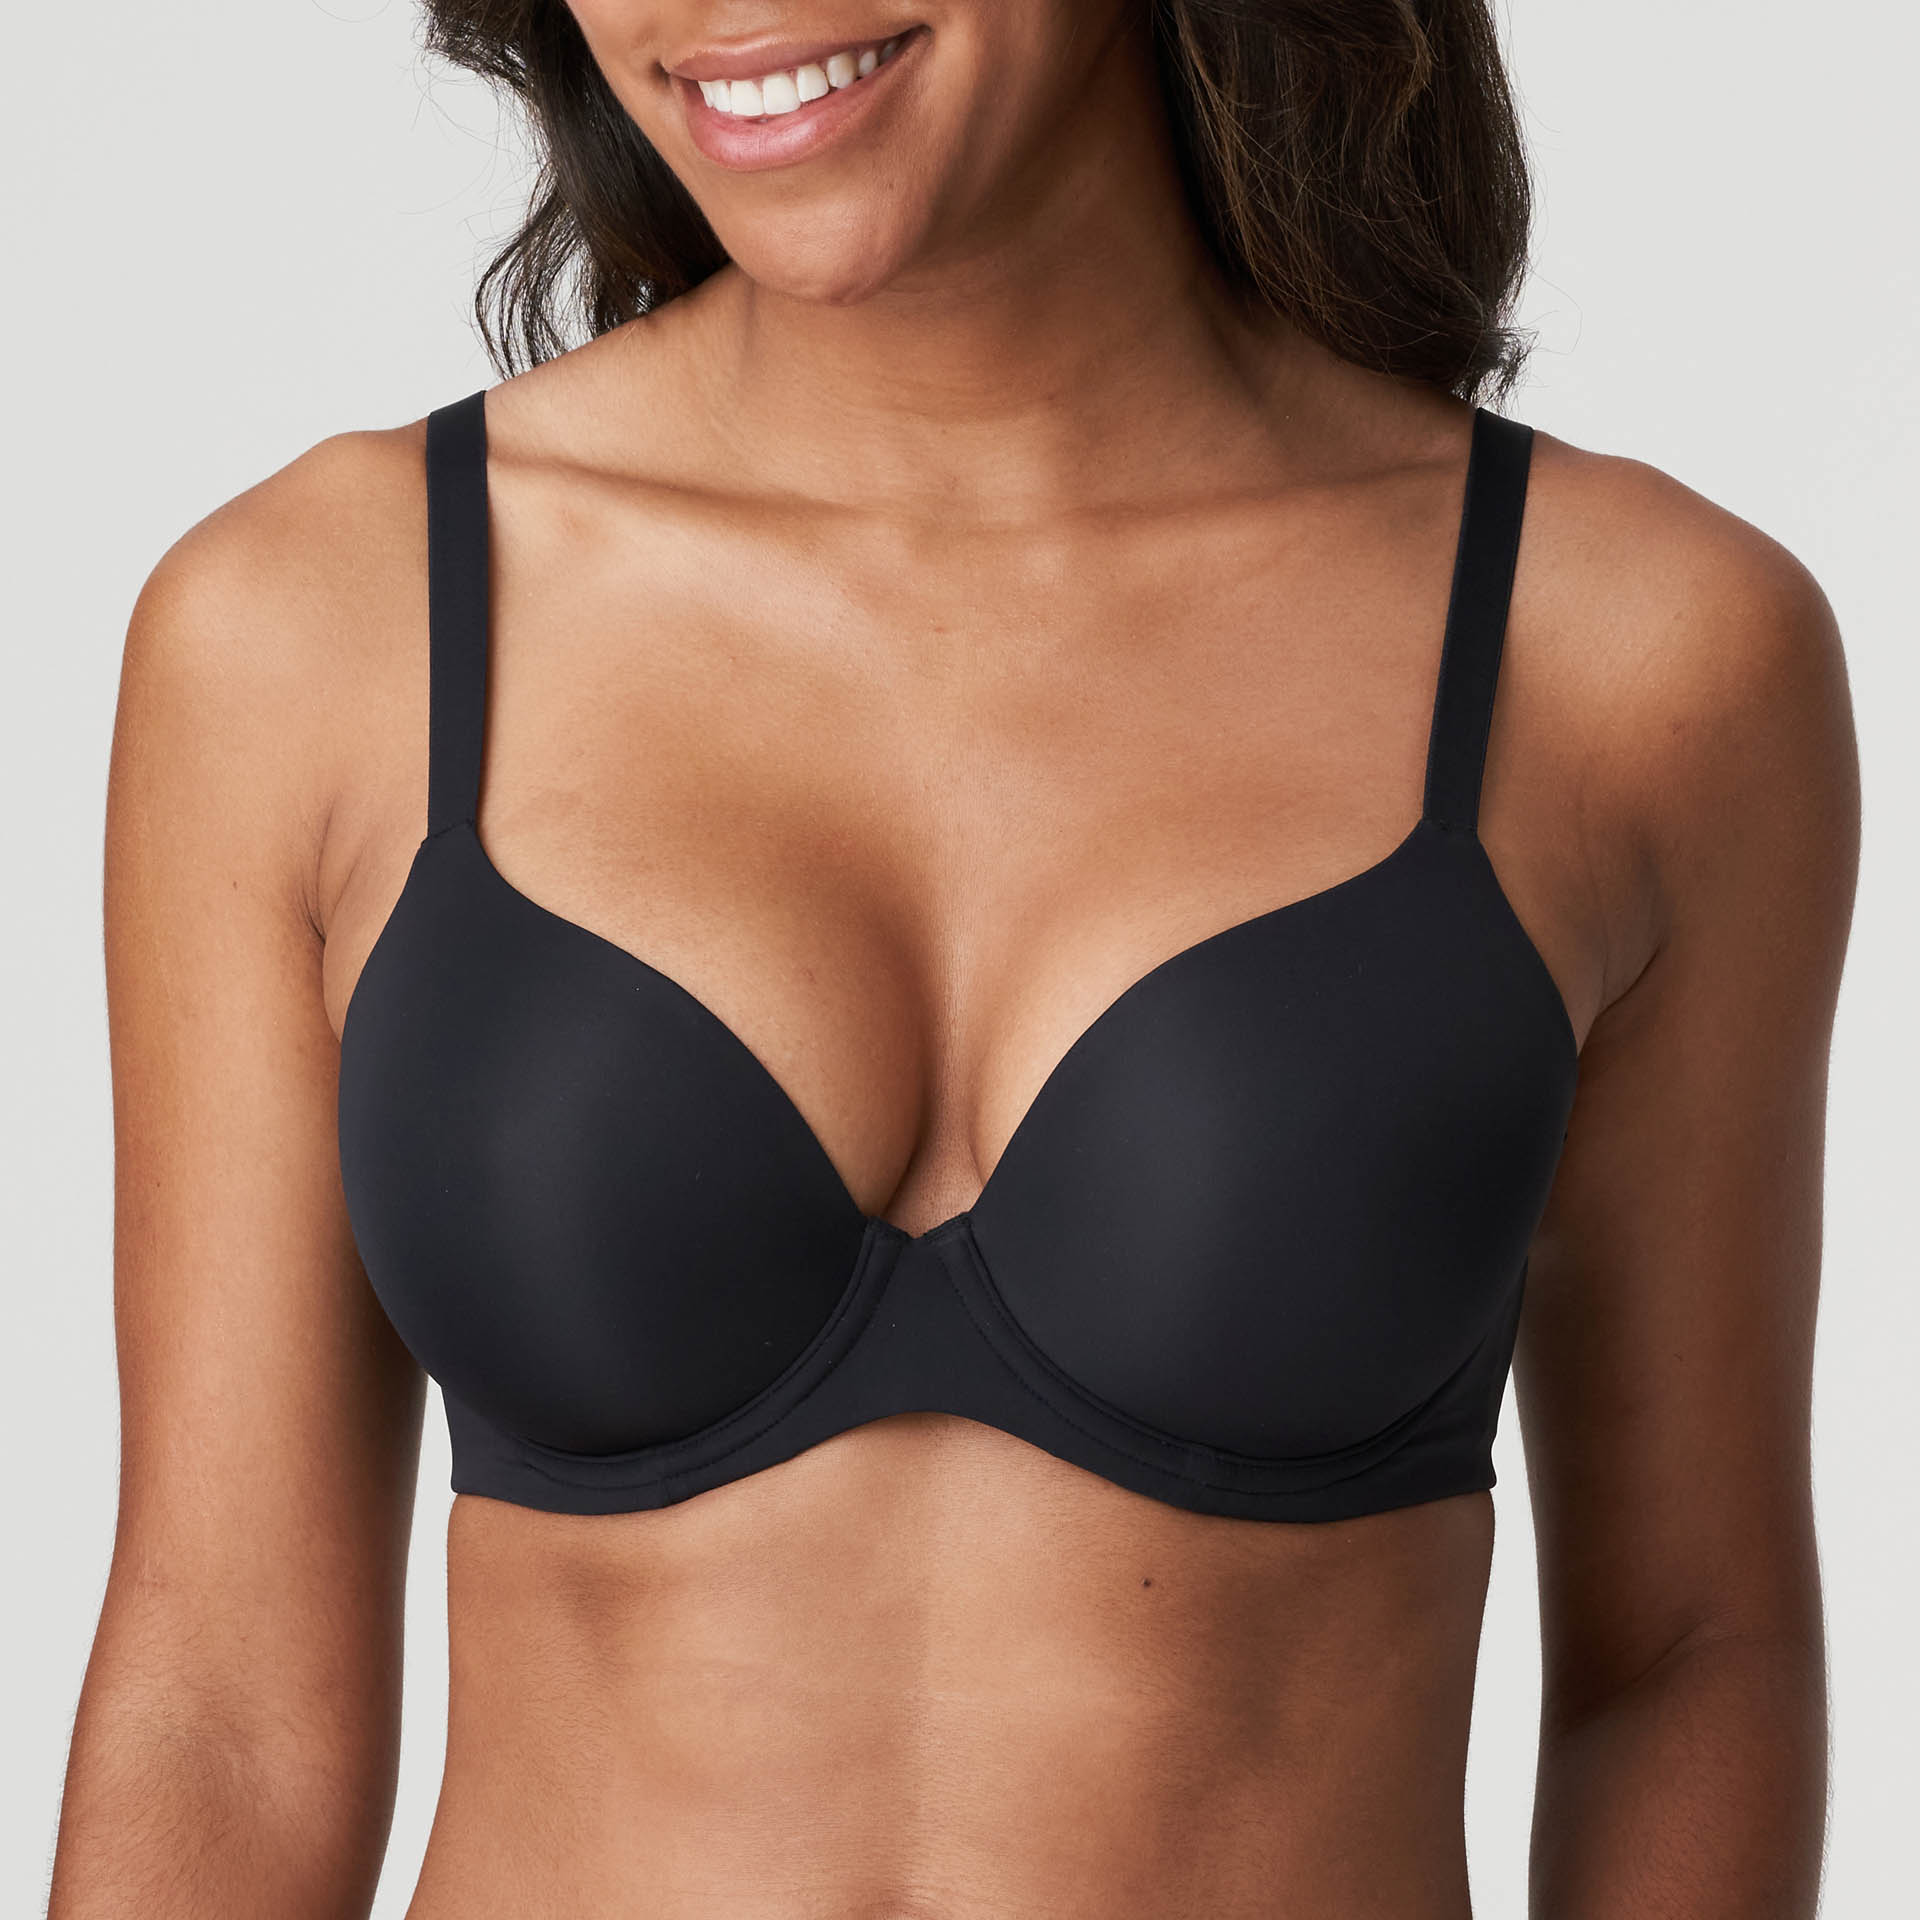 Sale][US] Prima Donna sports bra [36G UK], Fit Fully Yours molded T-shirt  bra [36G US], 3 VS molded bras [36DD][36DDD] more details in comments :  r/braswap